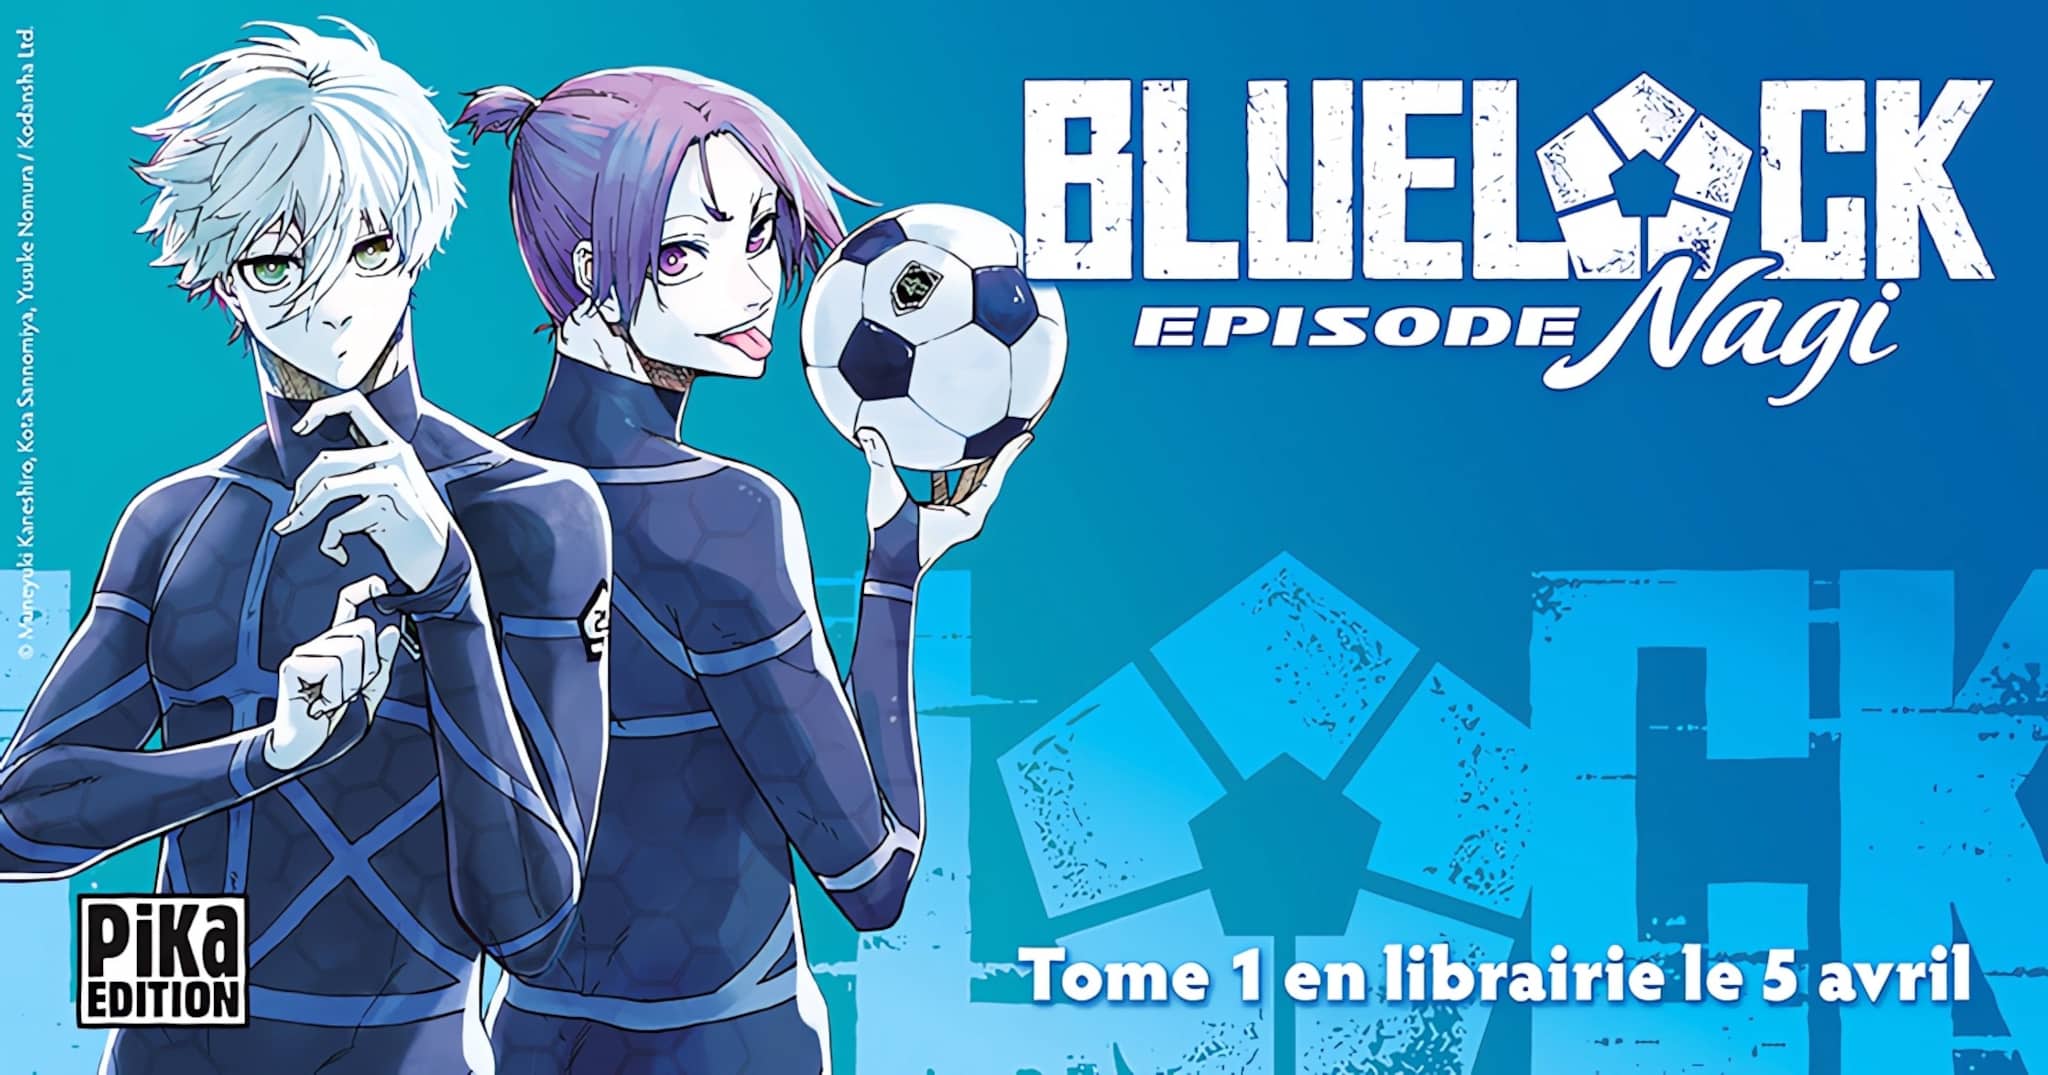 Annonce de la date de sortie en France du manga Blue Lock : Episode Nagi